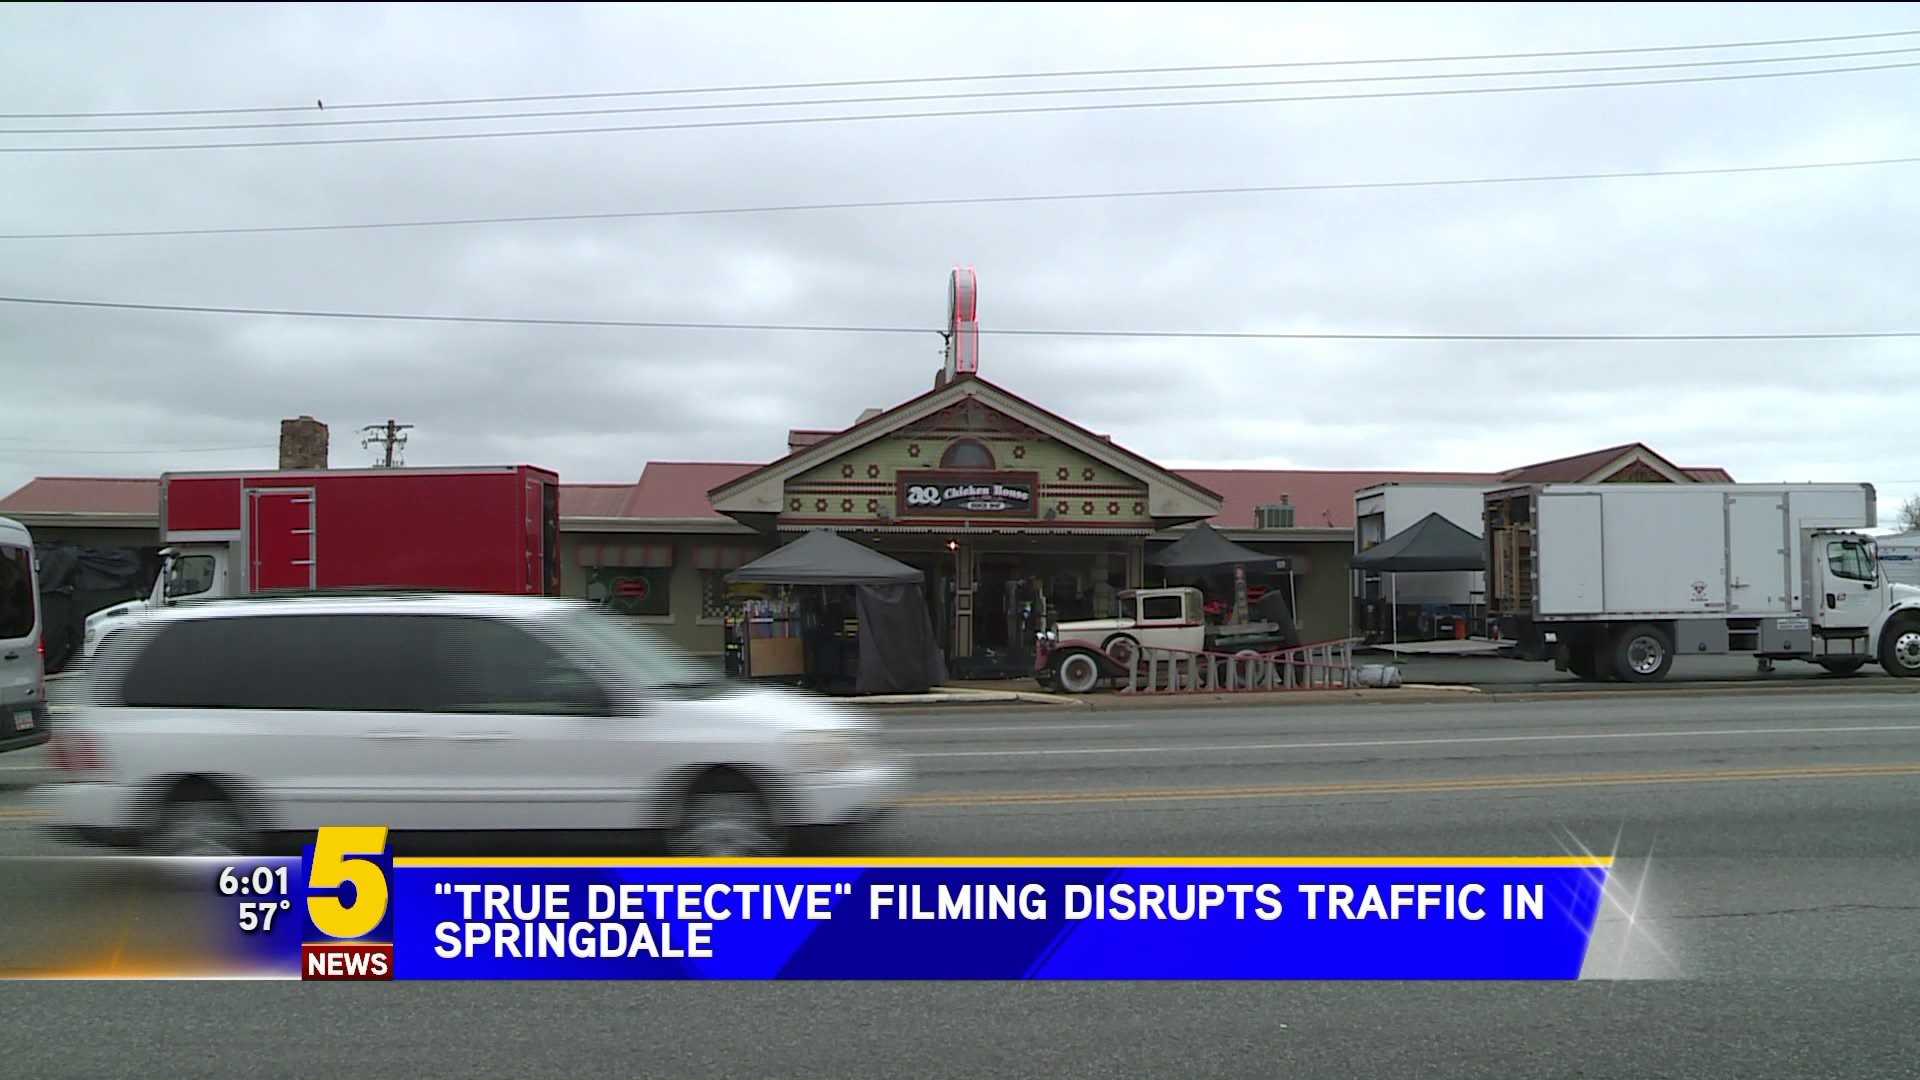 "True Detective" Delays Traffic In Springdale